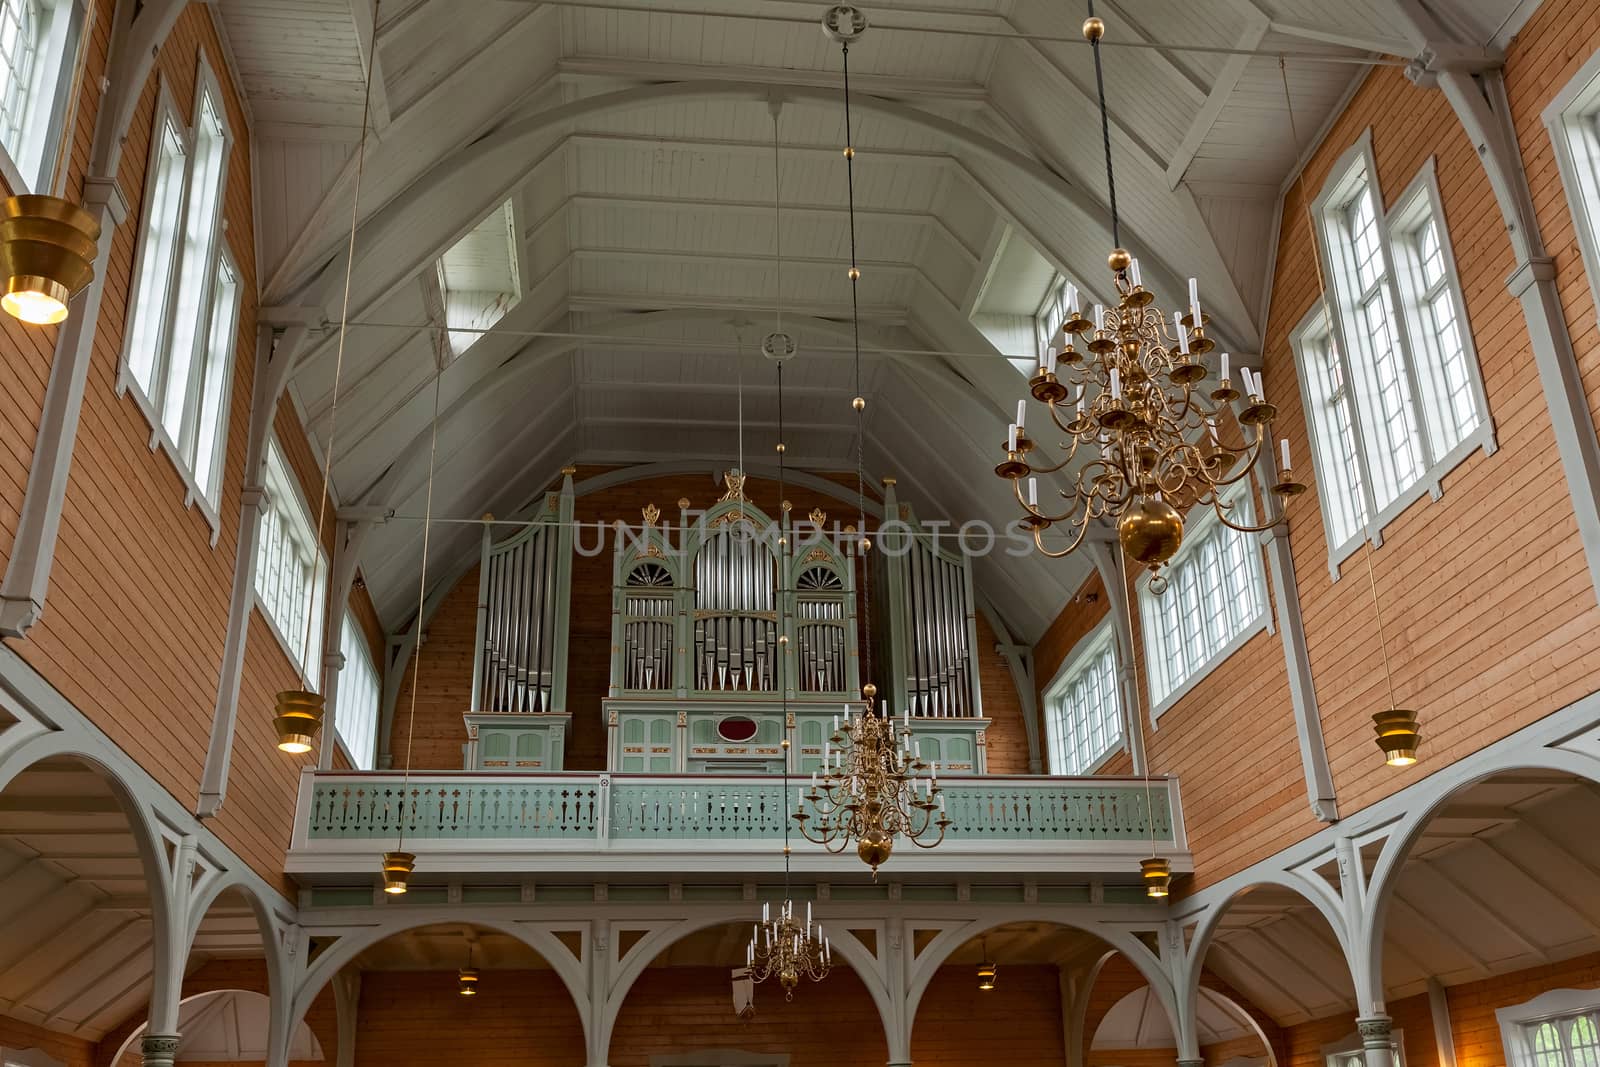 Pipe organ inside the Buksnes church in Gravdal city in Lofoten islands, Norway